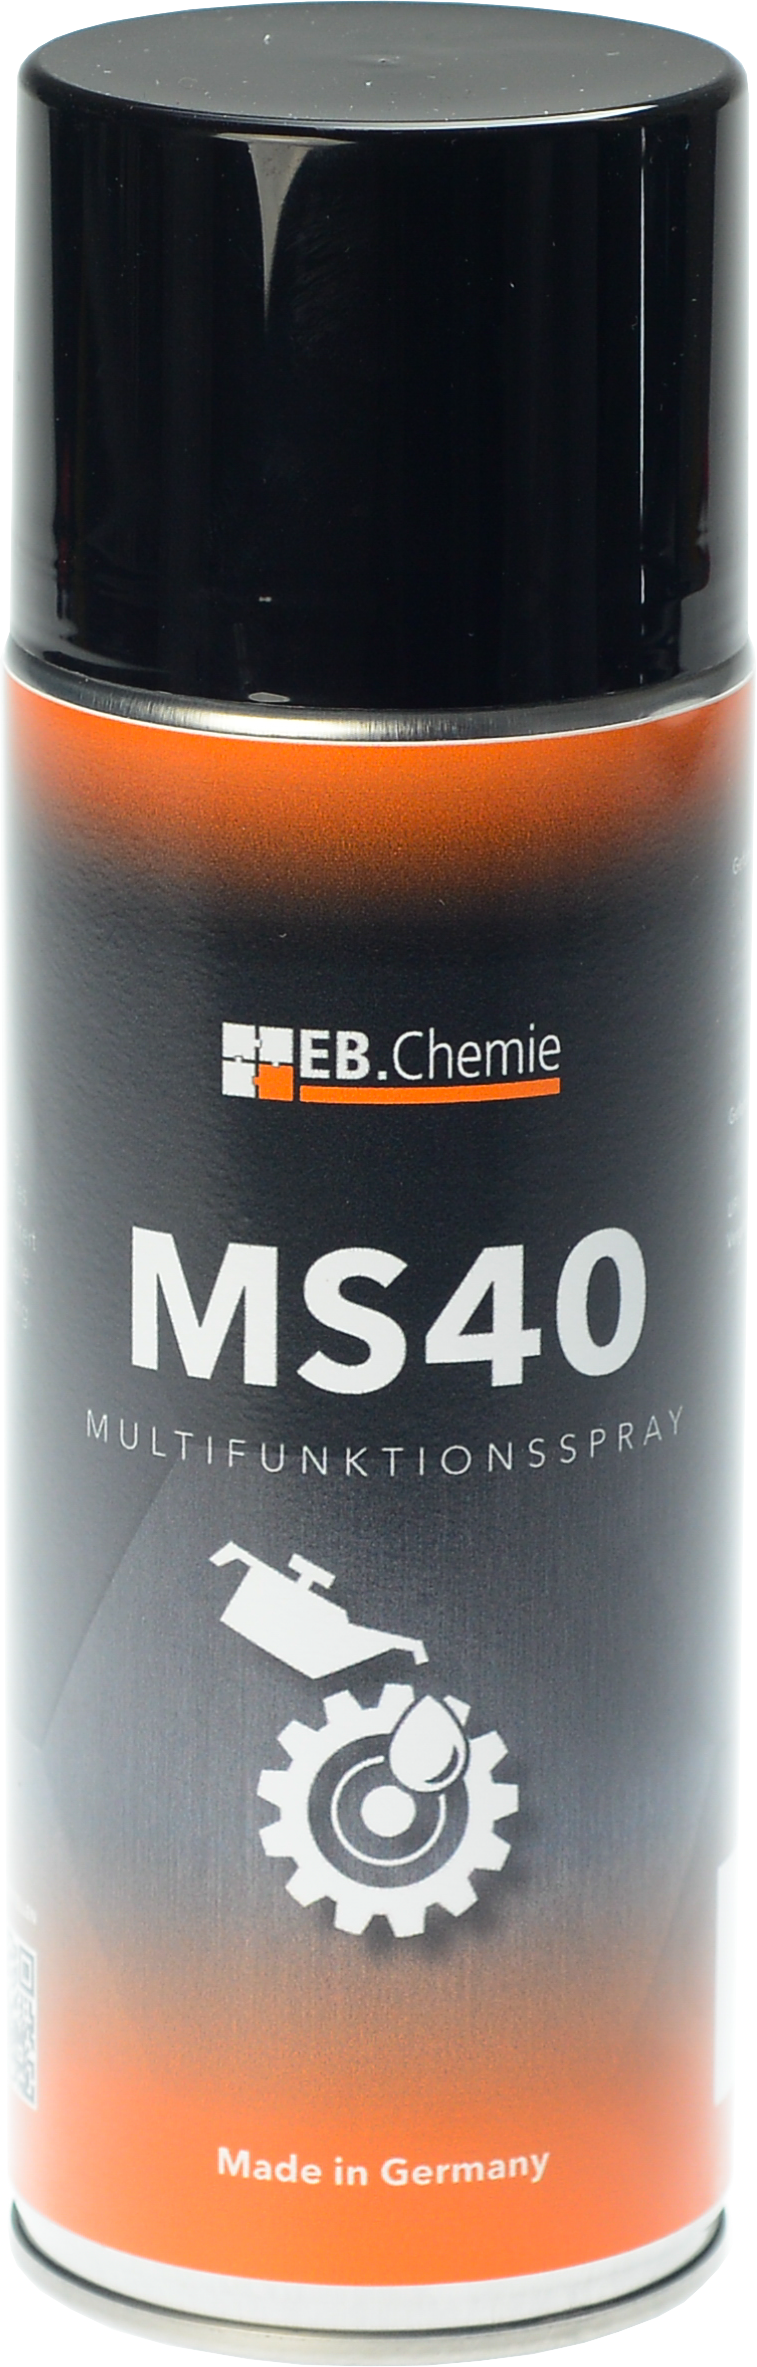 MS40 - Multifunktionsspray